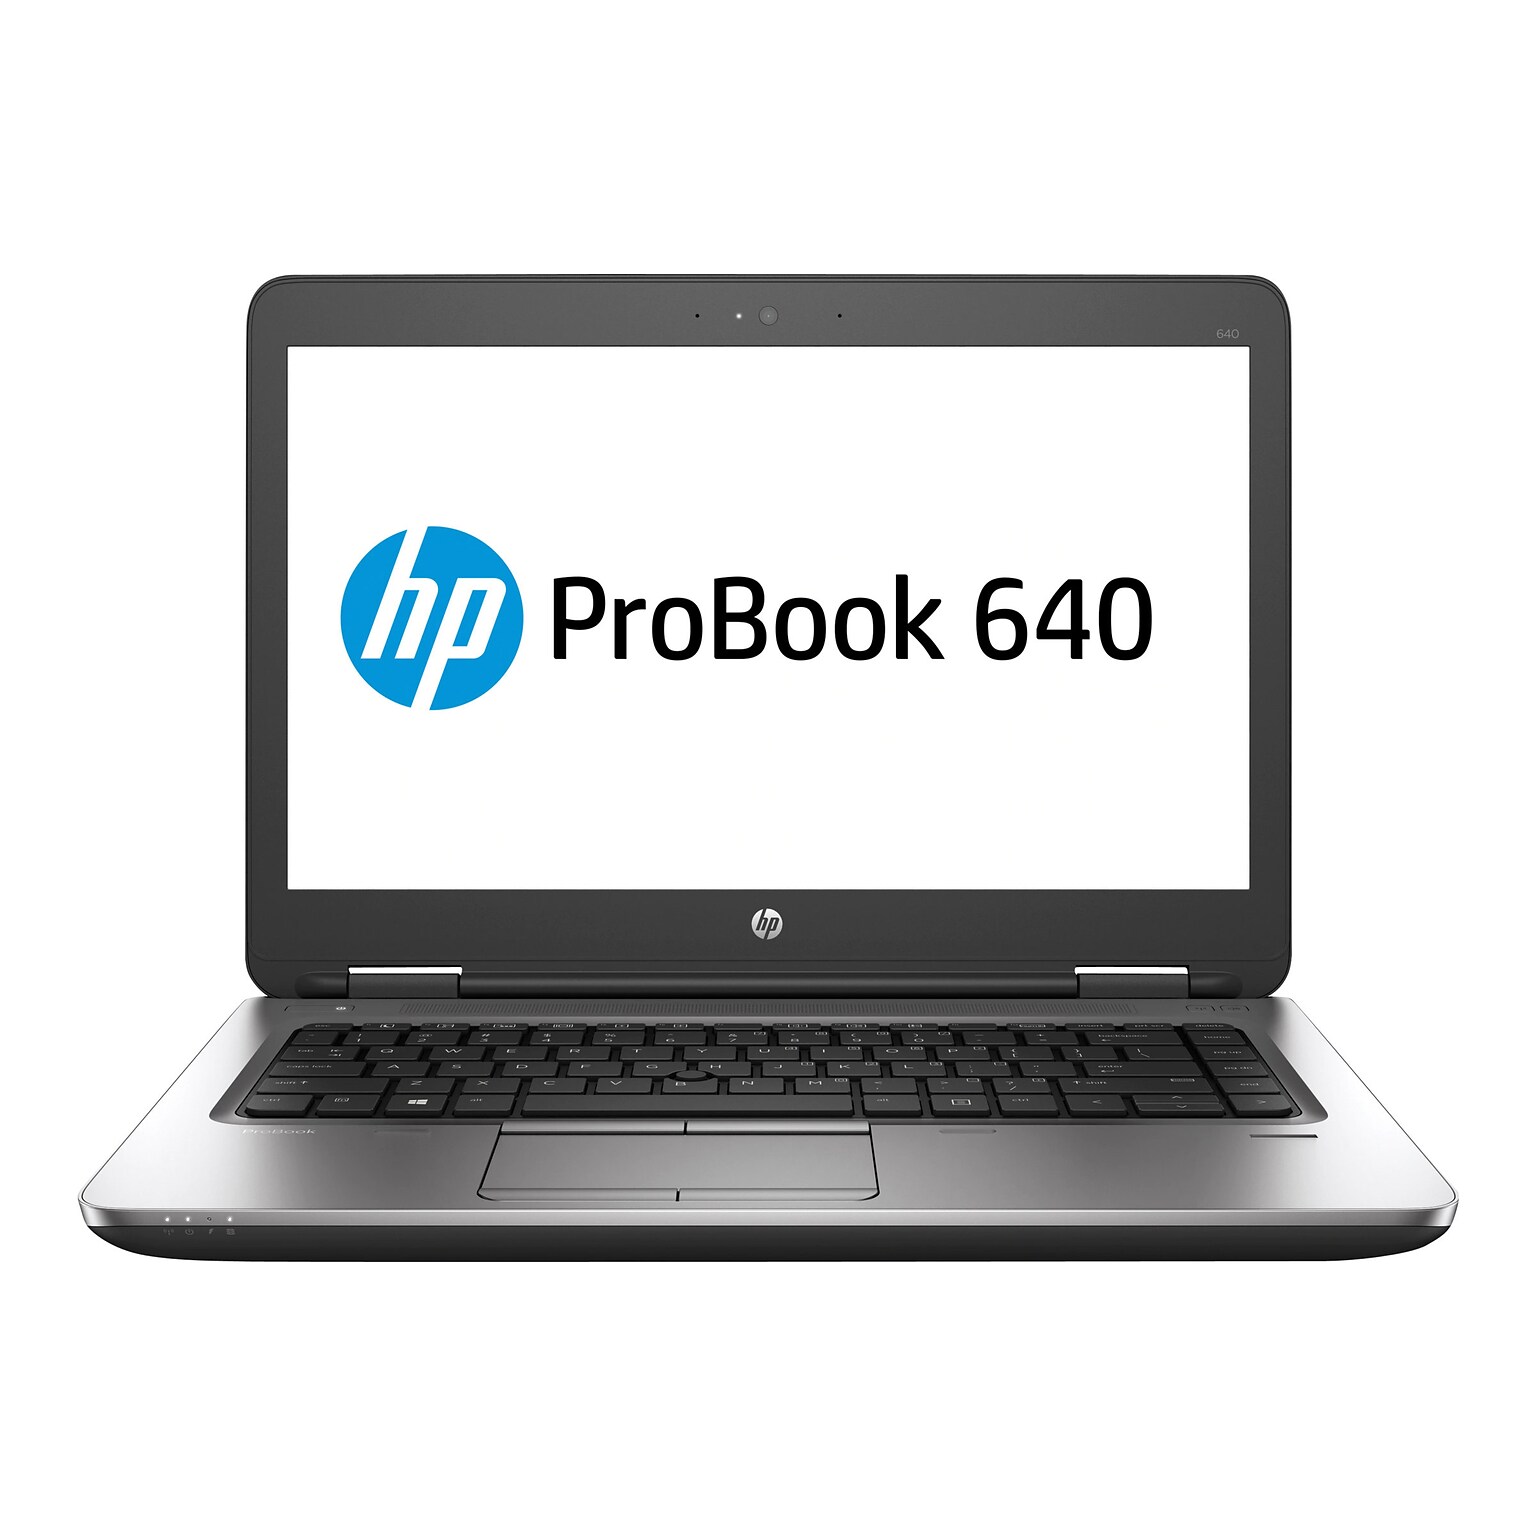 HP ProBook 640 G2 14 Refurbished Notebook, Intel i5, 8GB Memory, 256GB SSD, Windows 10 Pro (V1H09UT)